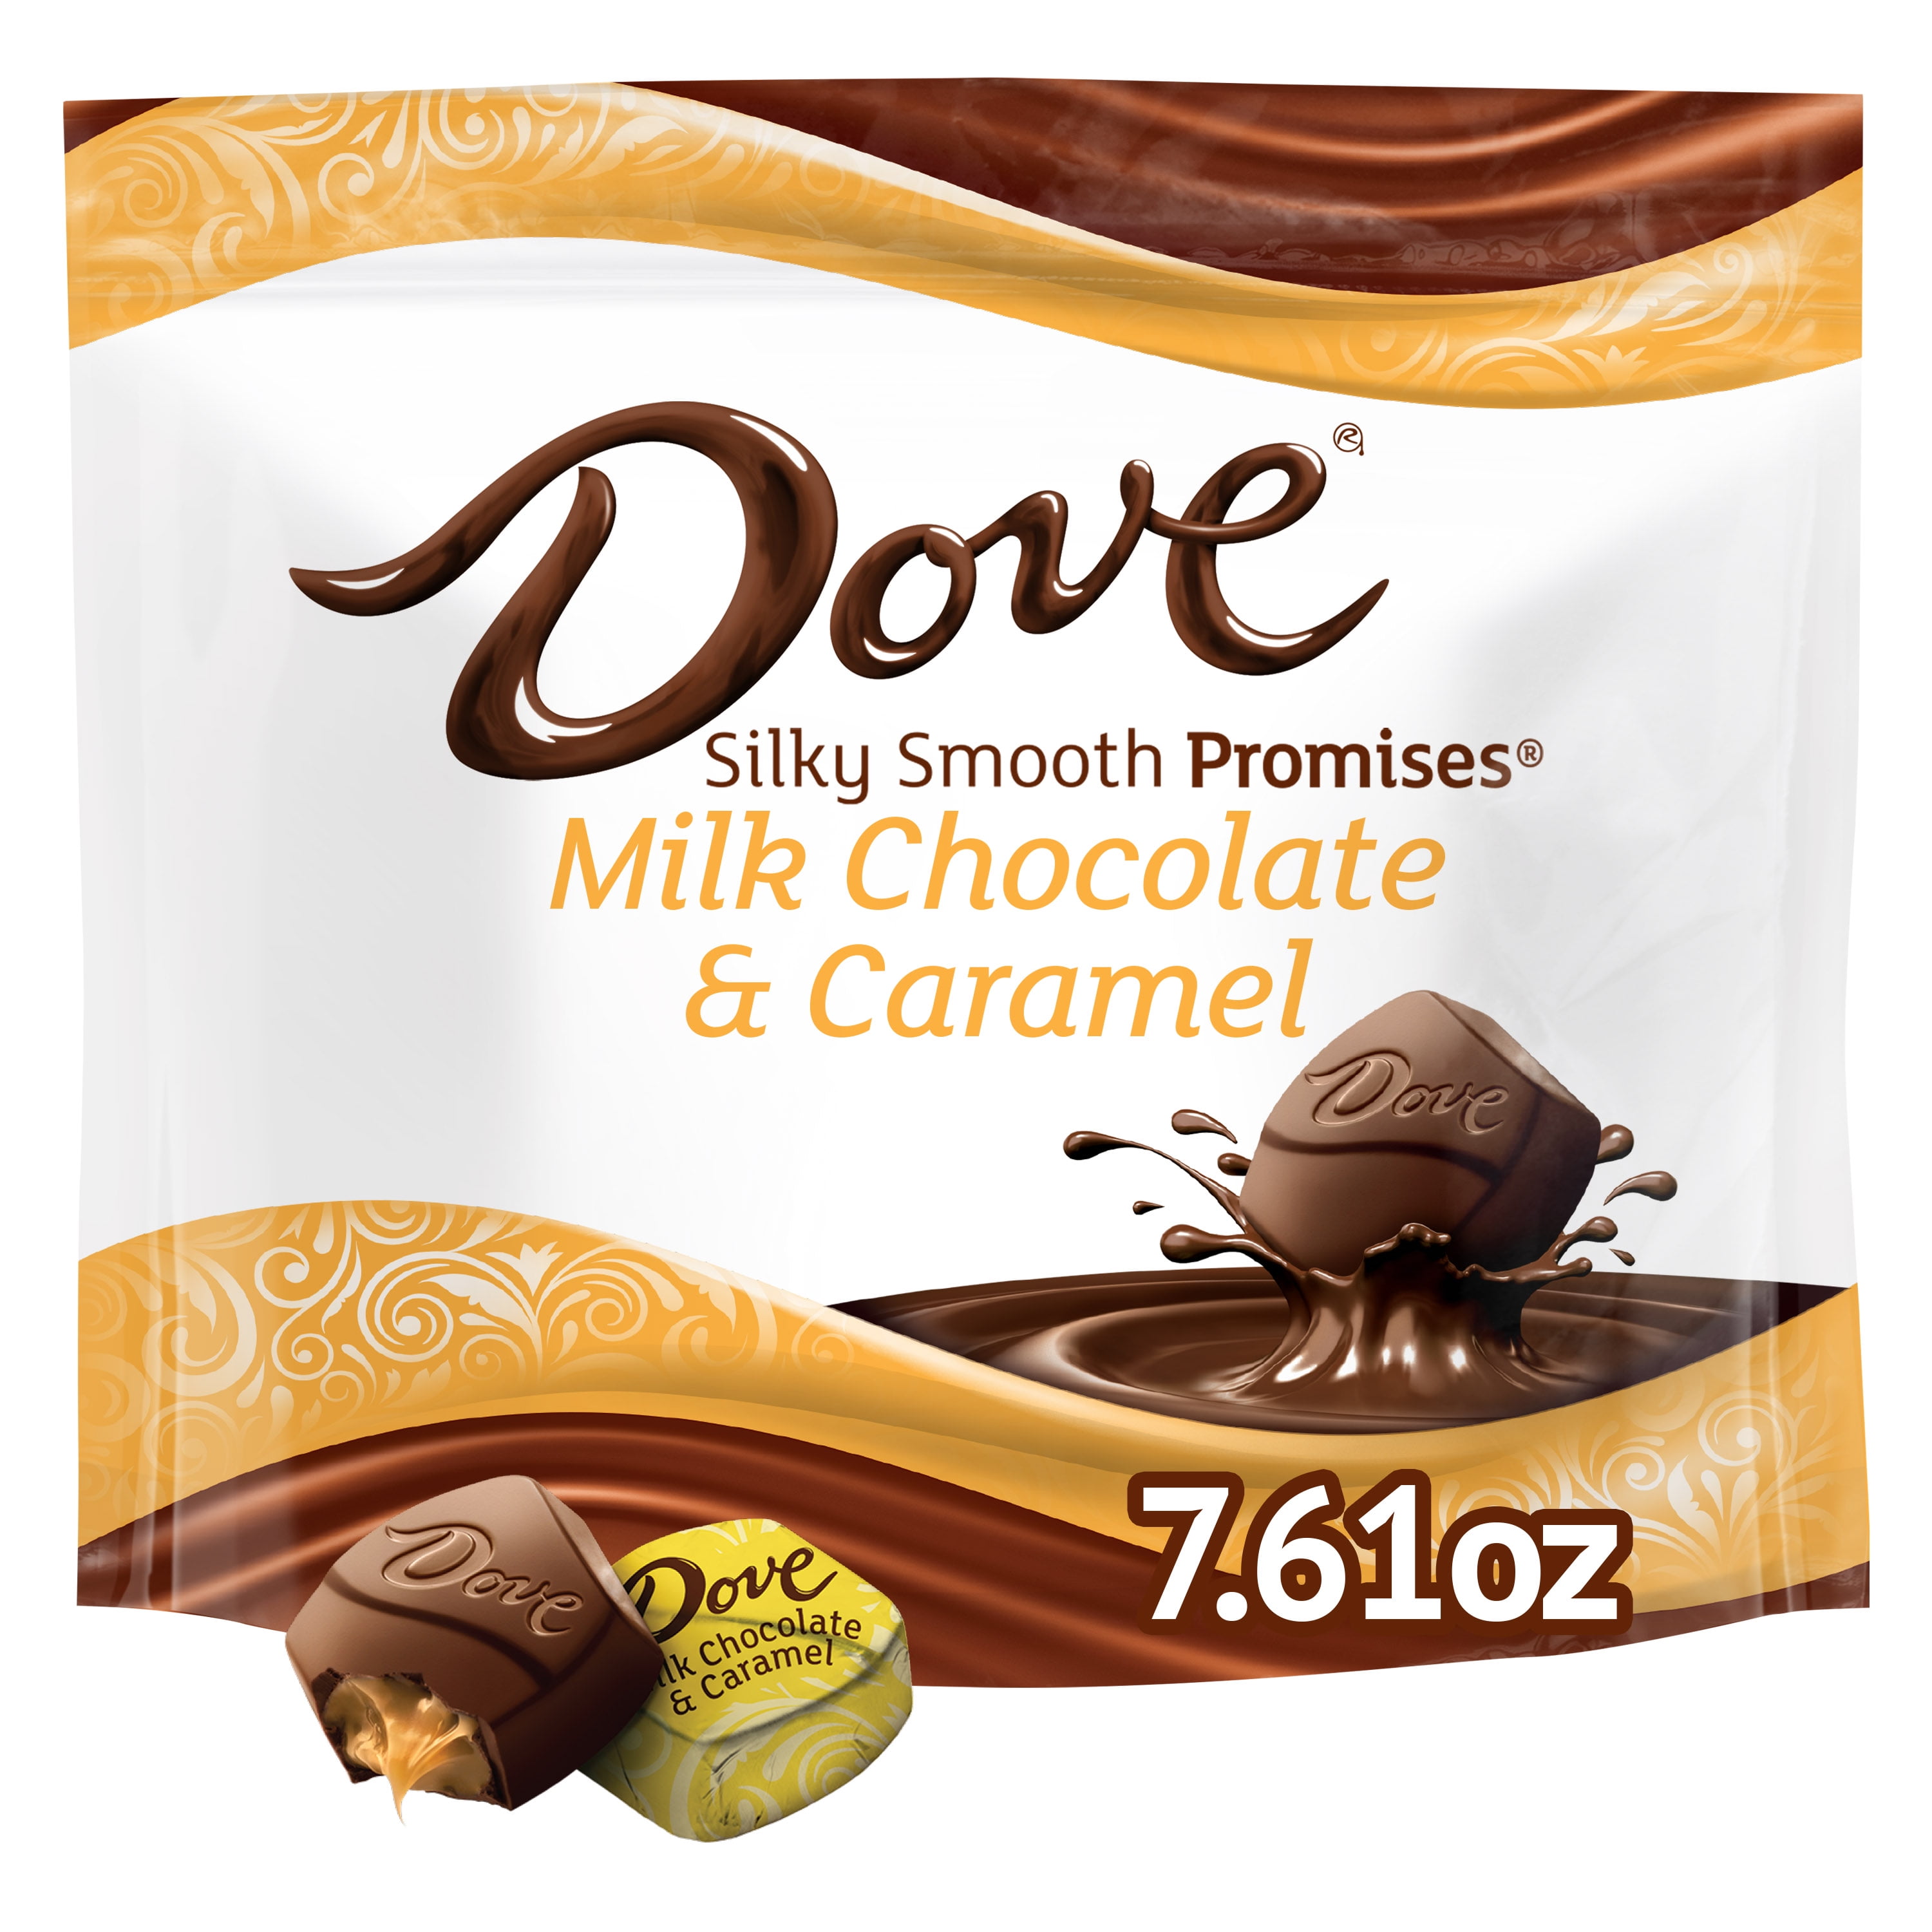 Dove Promises Milk Chocolate Caramel Candy - 7.61 oz Bag